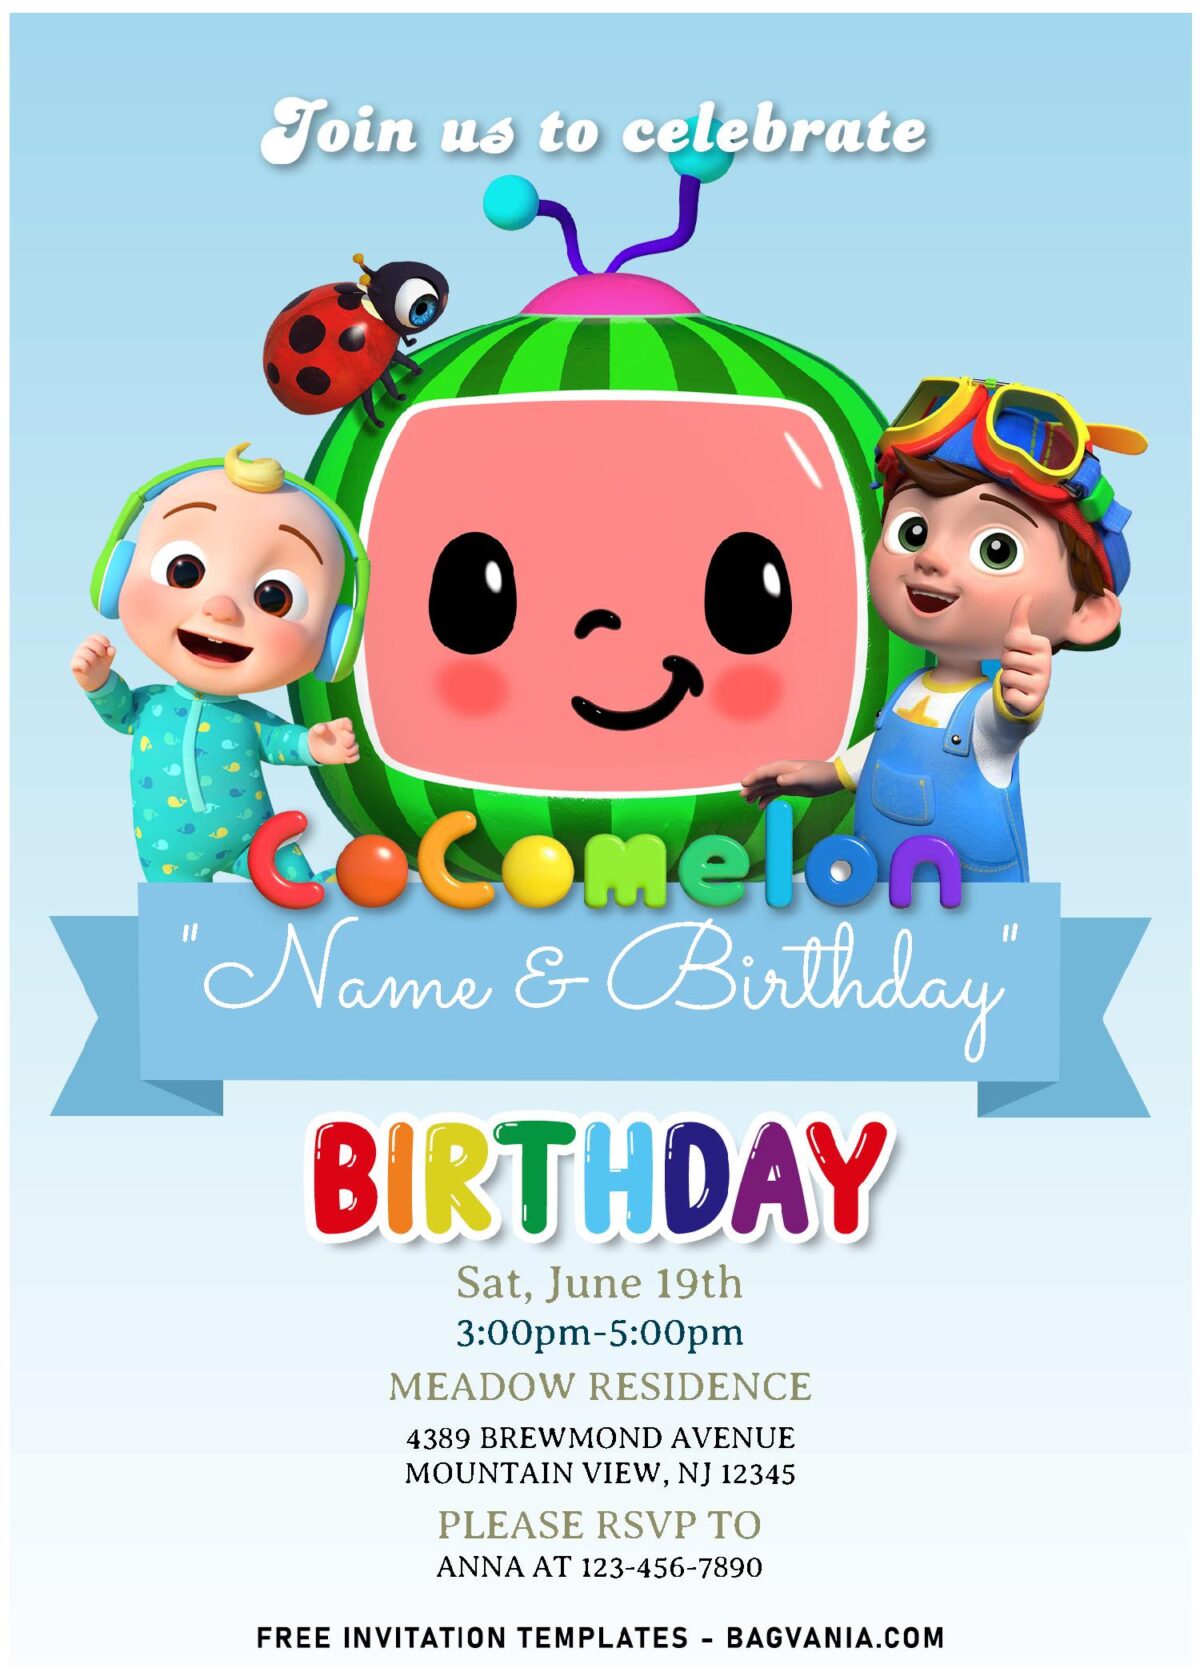 (Free Editable PDF) Bright & Cheerful Cocomelon Birthday Invitation Templates with Watermelon TV